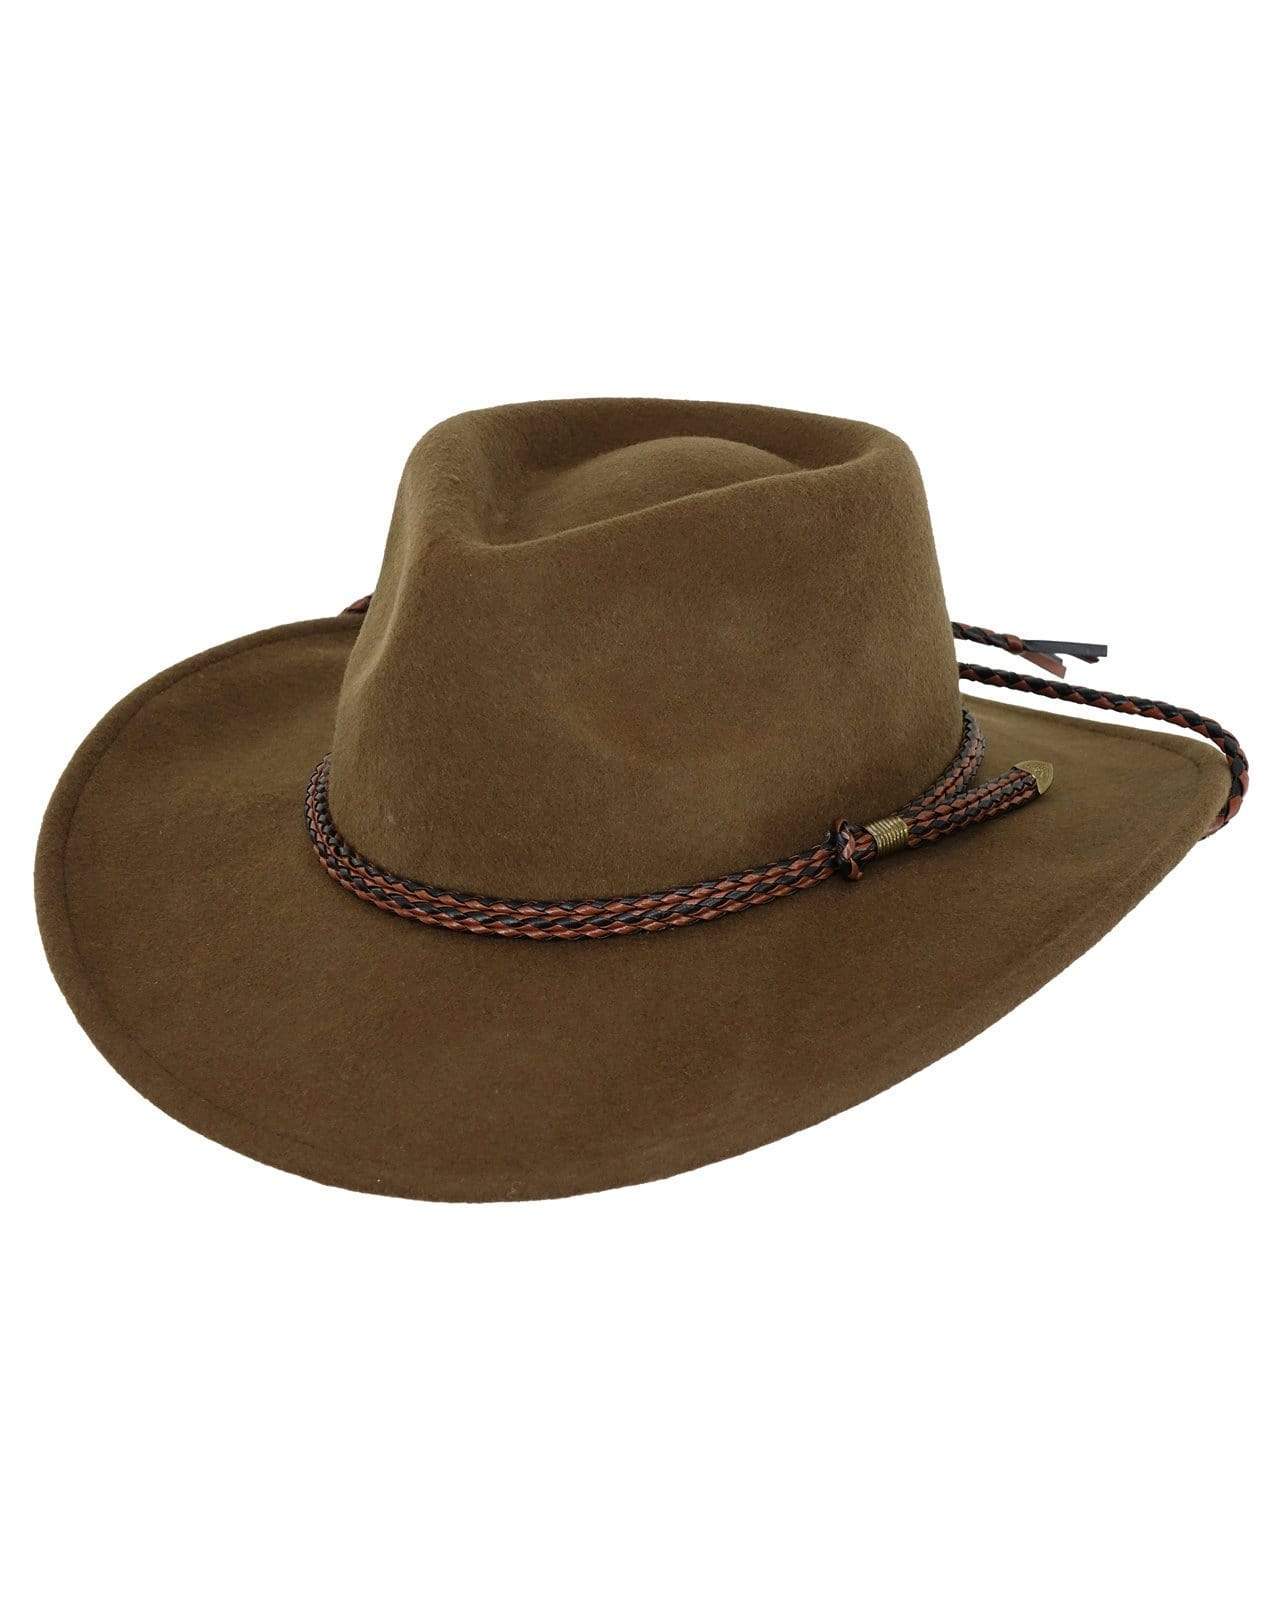 dokumentarfilm Reklame Prædiken Broken Hill | Wool Felt Hats by Outback Trading Company | OutbackTrading.com